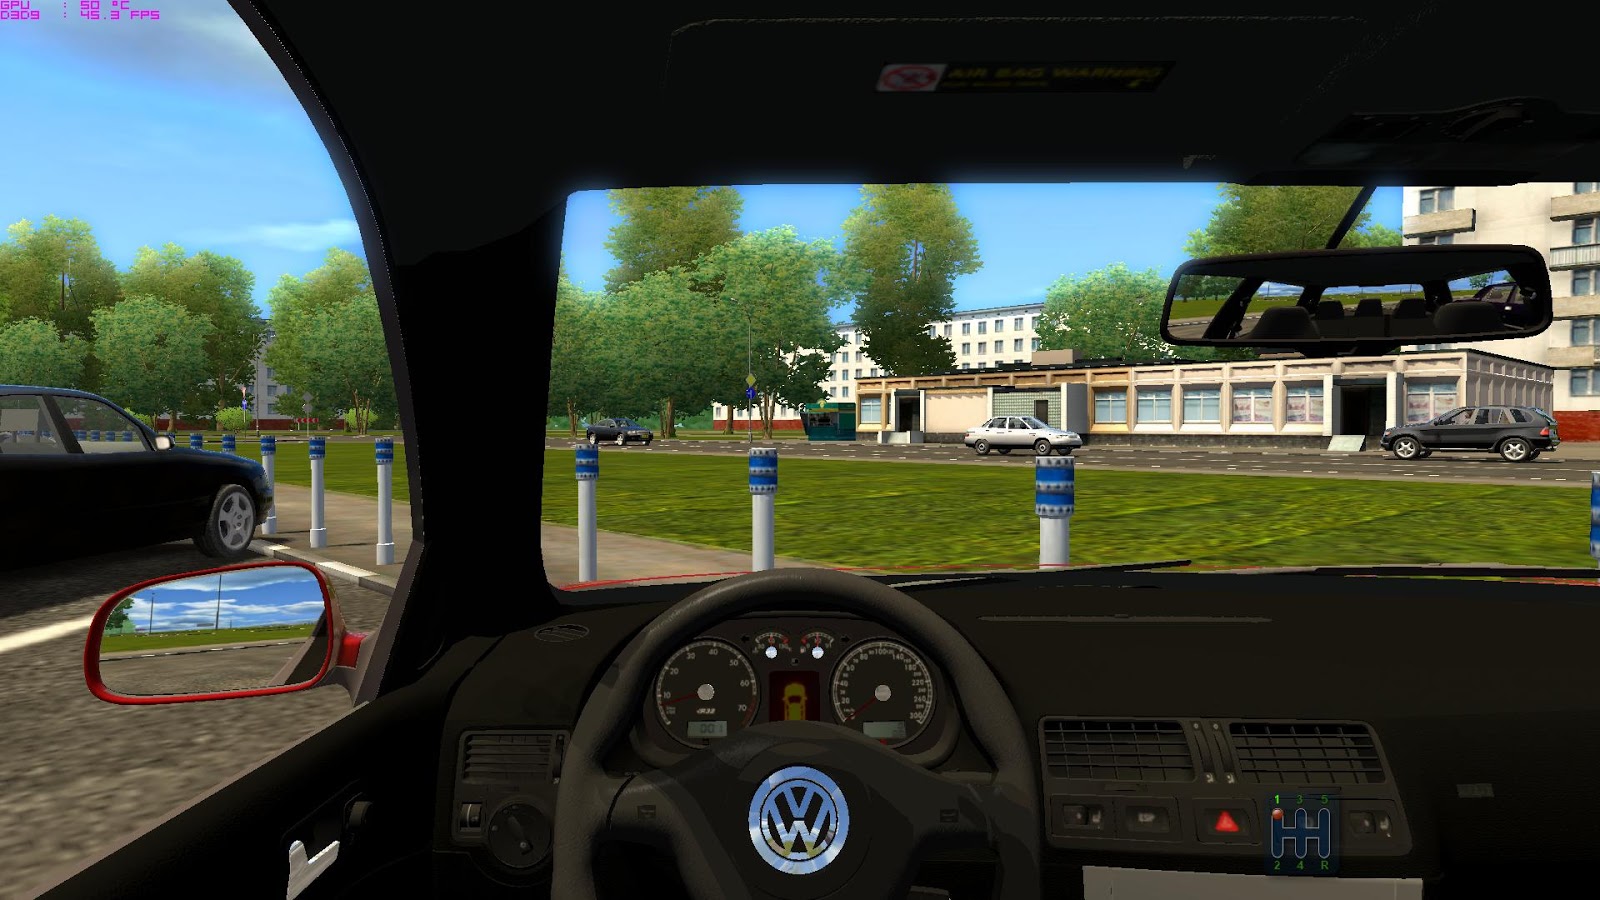 City car driving автомат. БТР City car Driving. City car Driving описание игры. Golf 4 в играх. City car Driving Map Mod.